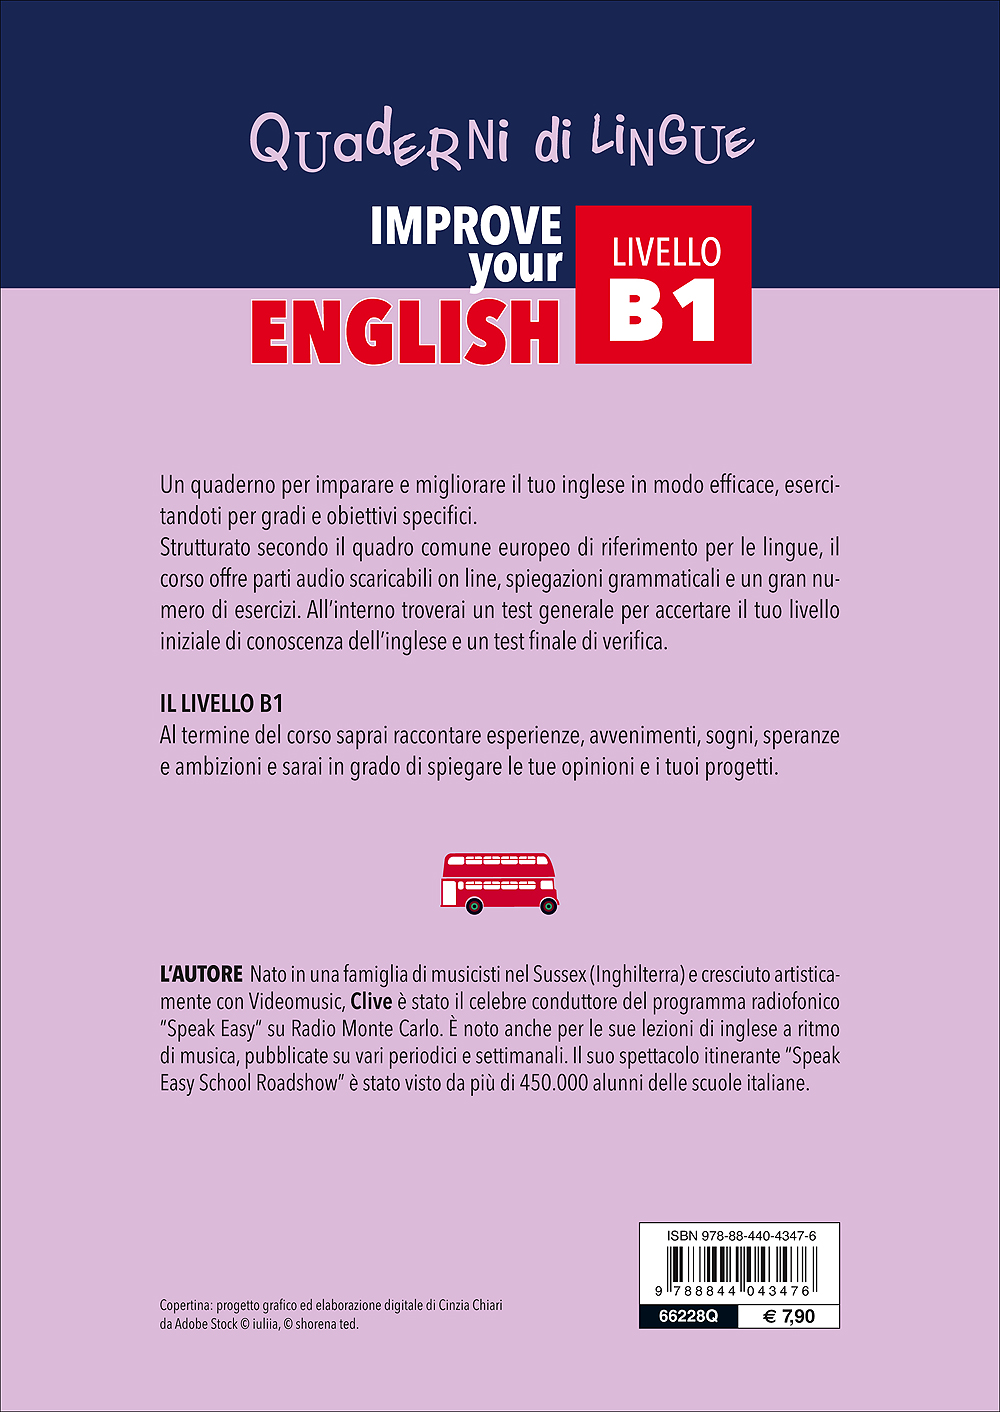 Improve your English B1